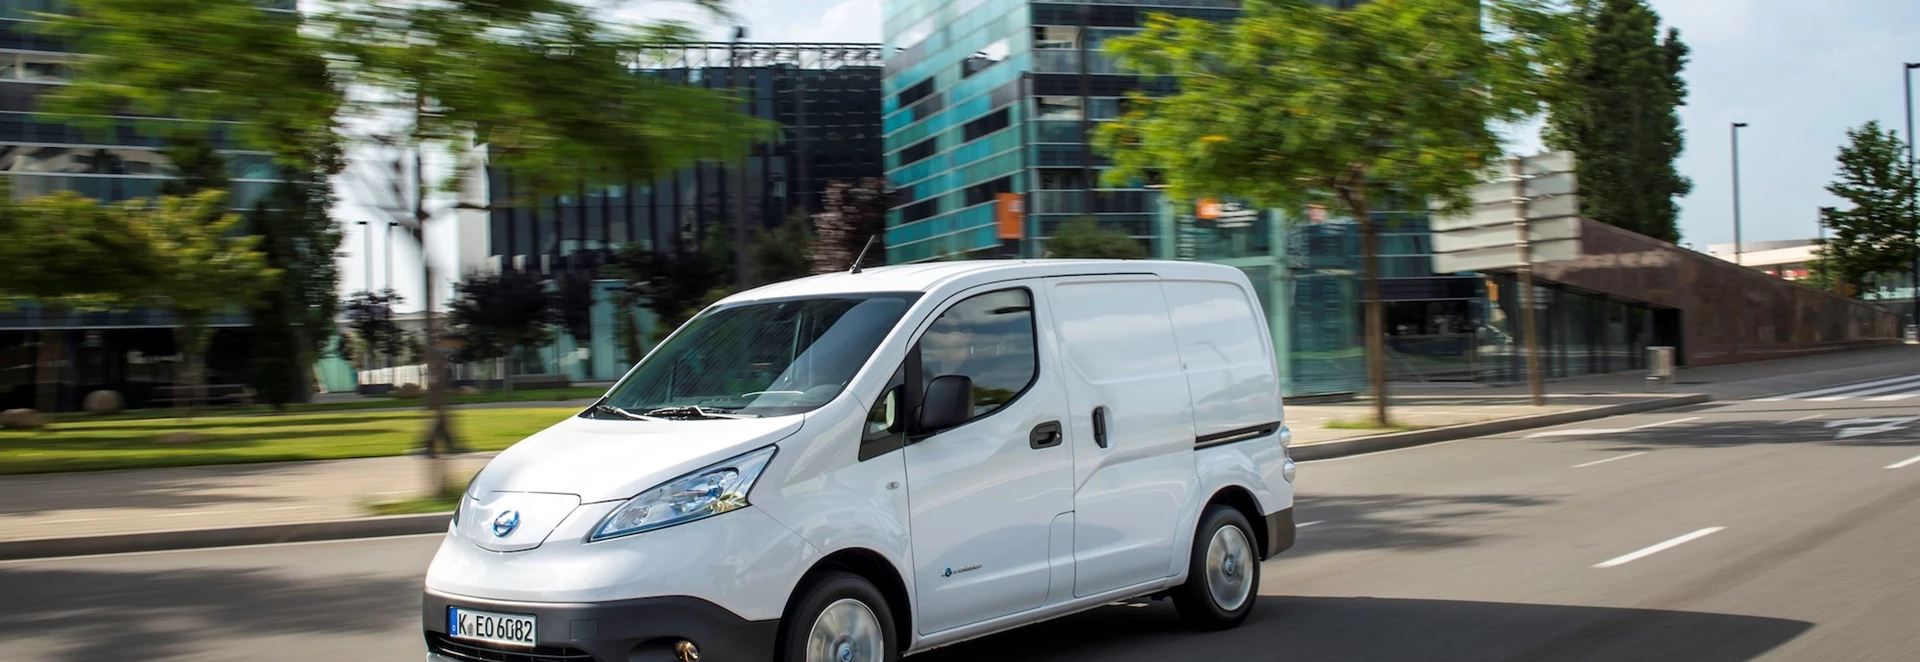 Nissan e-NV200 sales soar as electric vans increase in popularity 